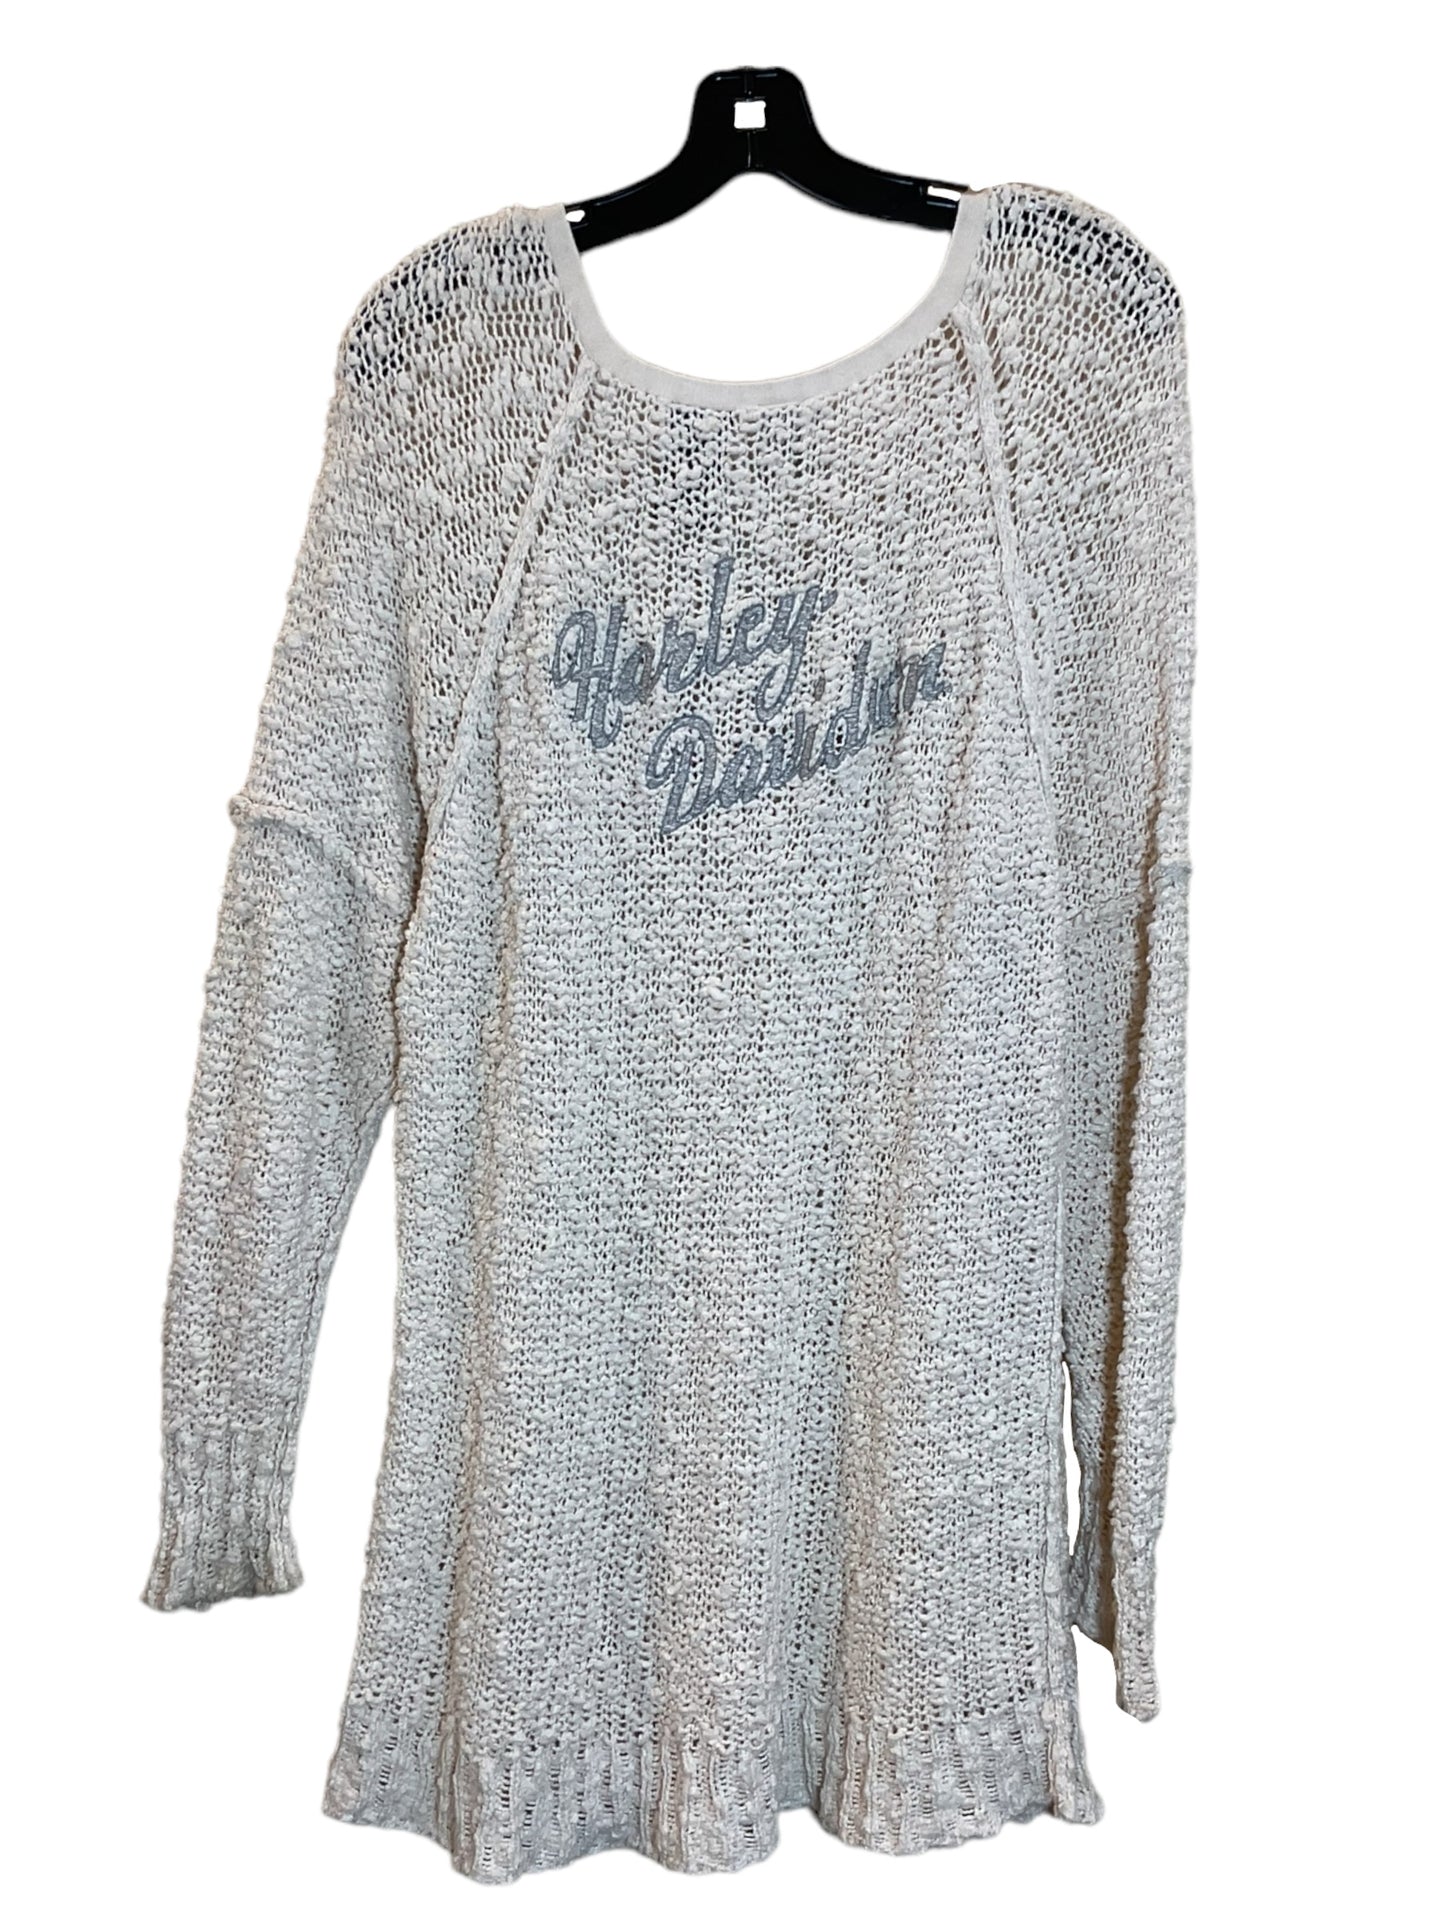 Sweater By Harley Davidson  Size: 2x